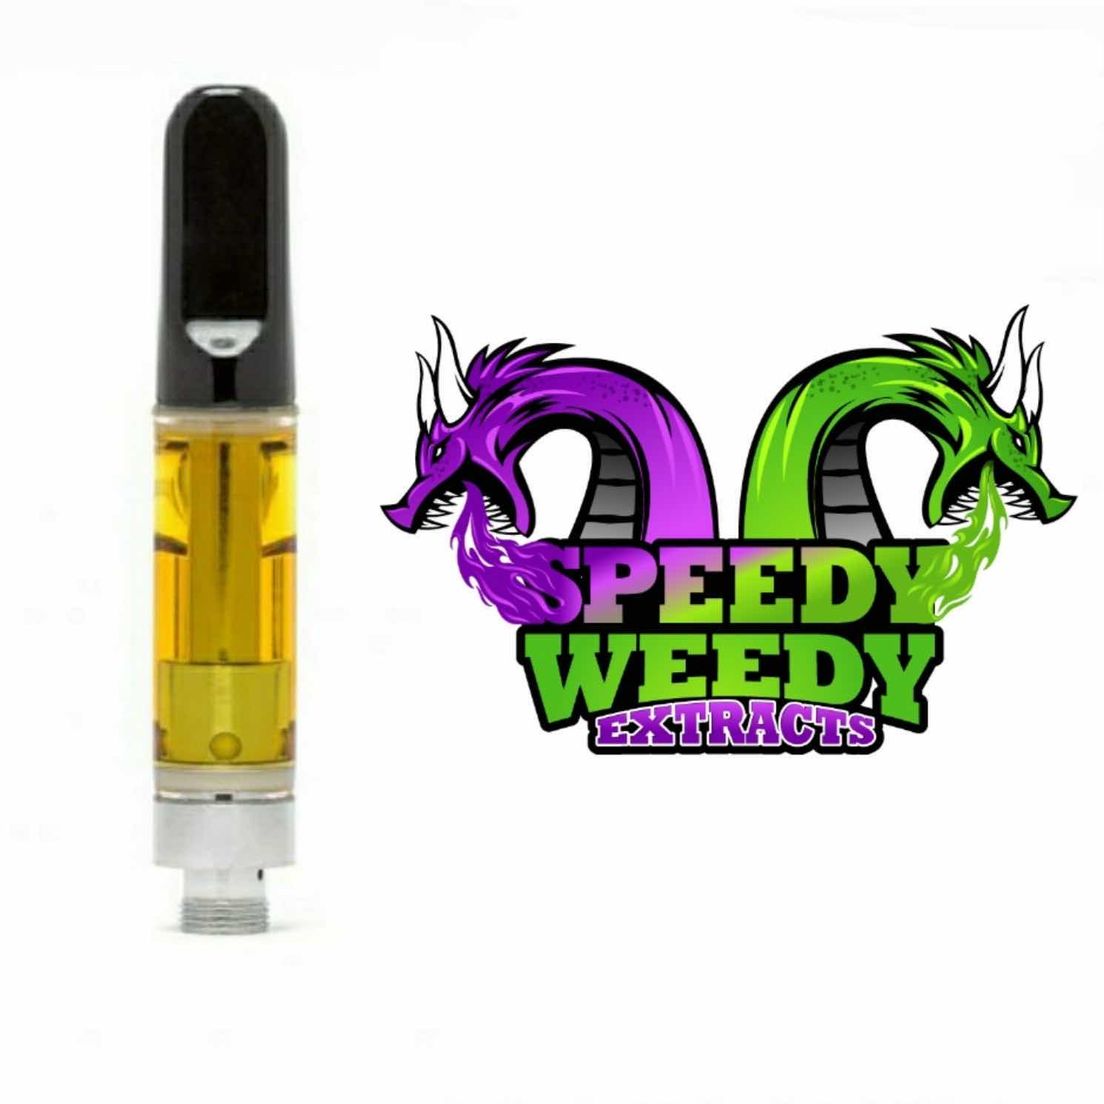 1. Speedy Weedy 1g THC Vape Cartridge - Gelato (H) 3/$60